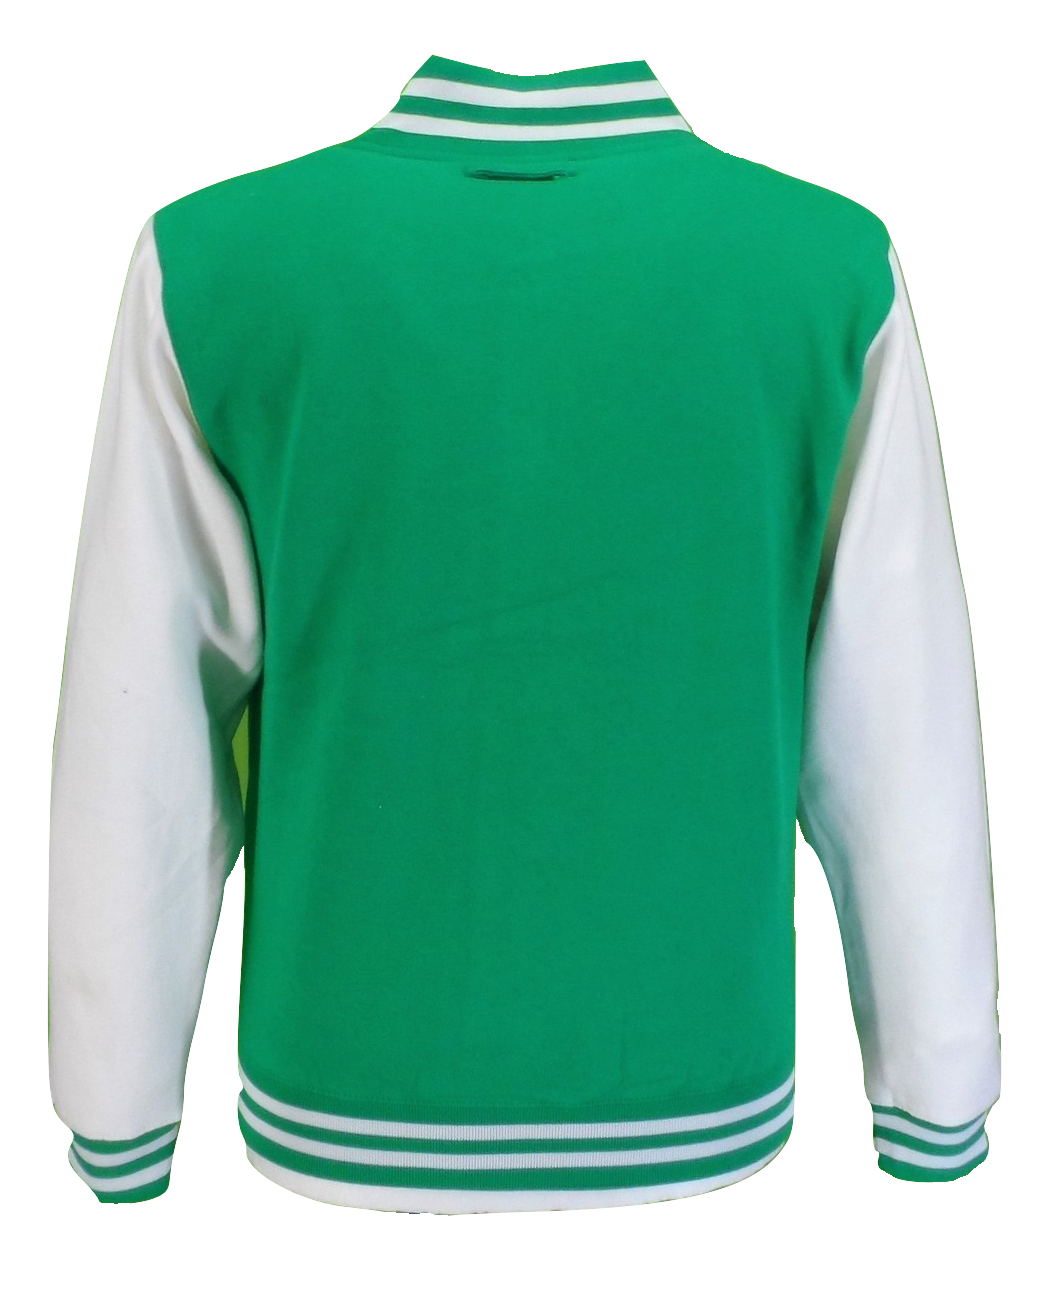 Mens Retro Green/White Varsity Letterman Jackets